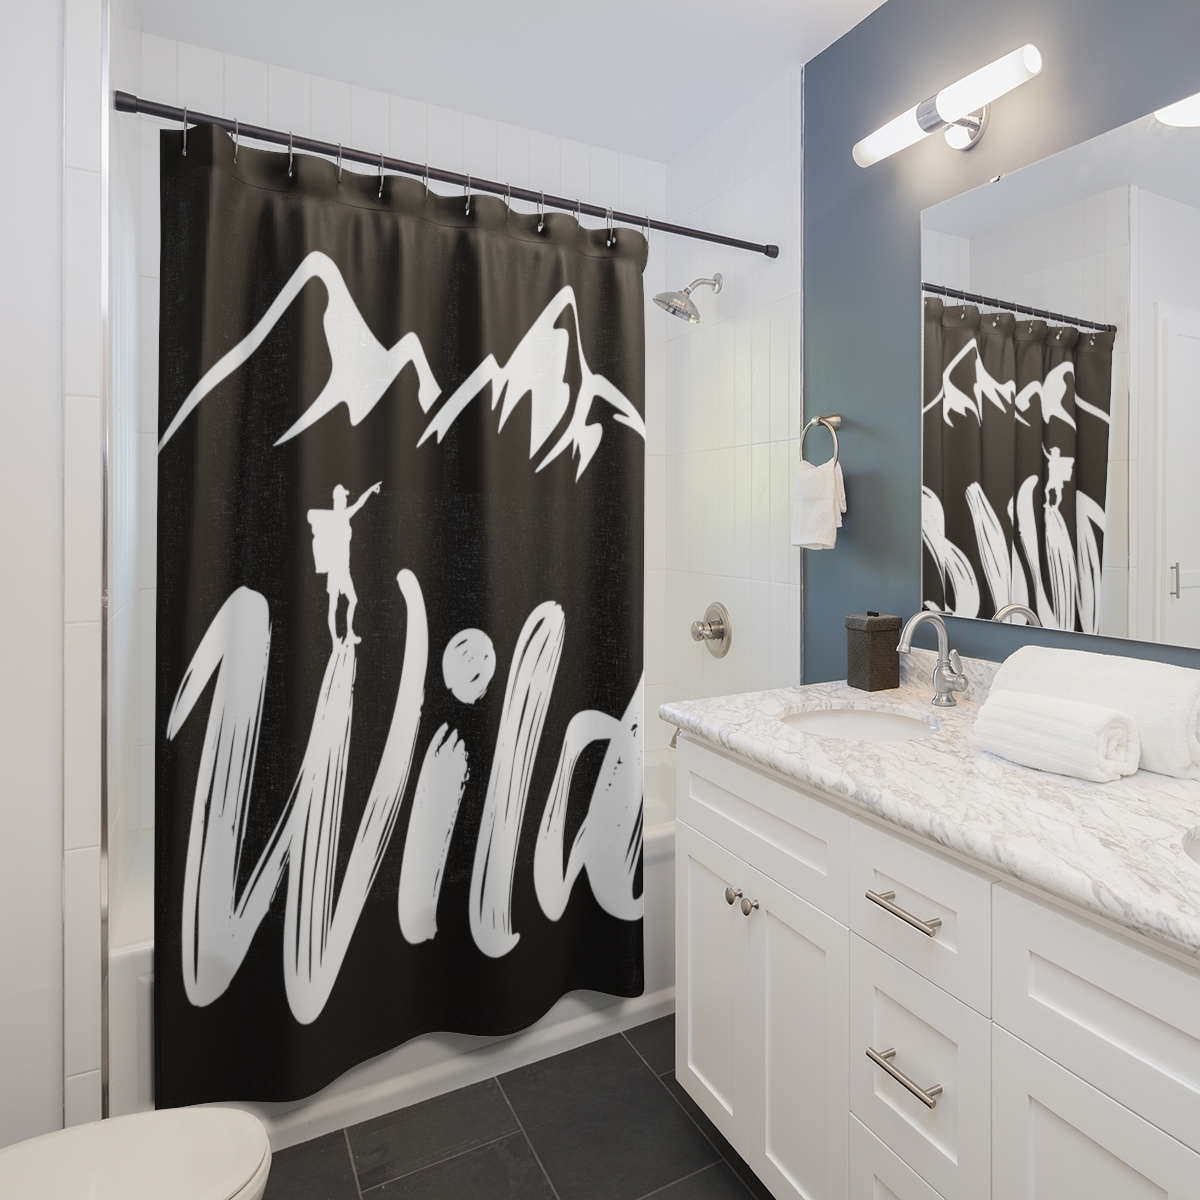 Nature's Explorer Shower Curtain: Unleash Your Wild Spirit in the Bathroom - $62.83